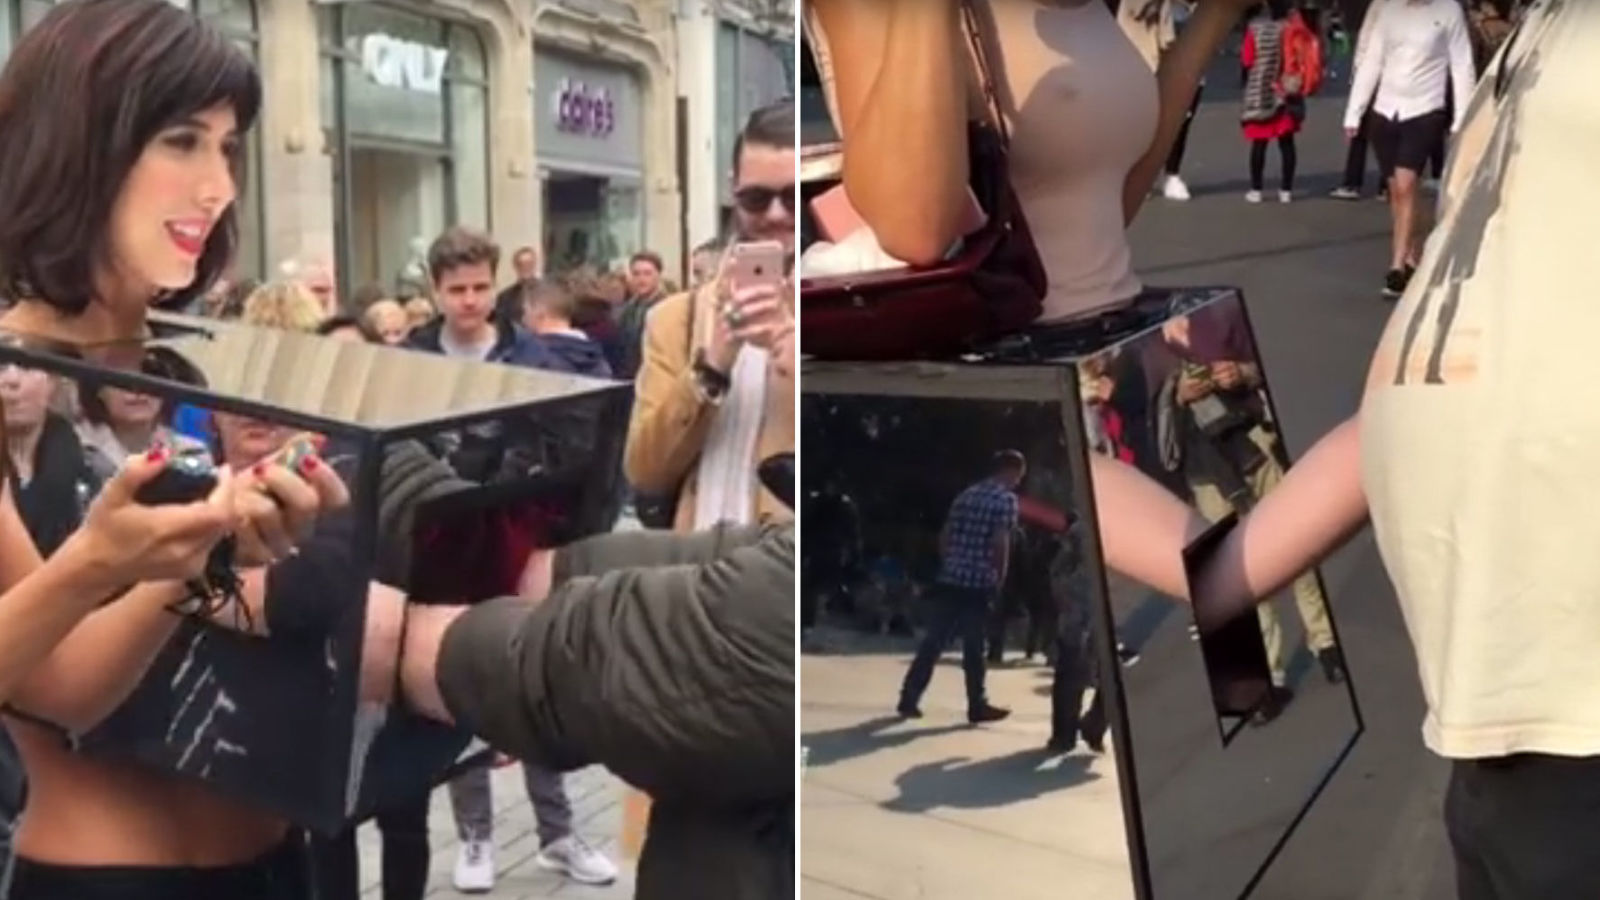 david p cruz add photo touching boobs in public